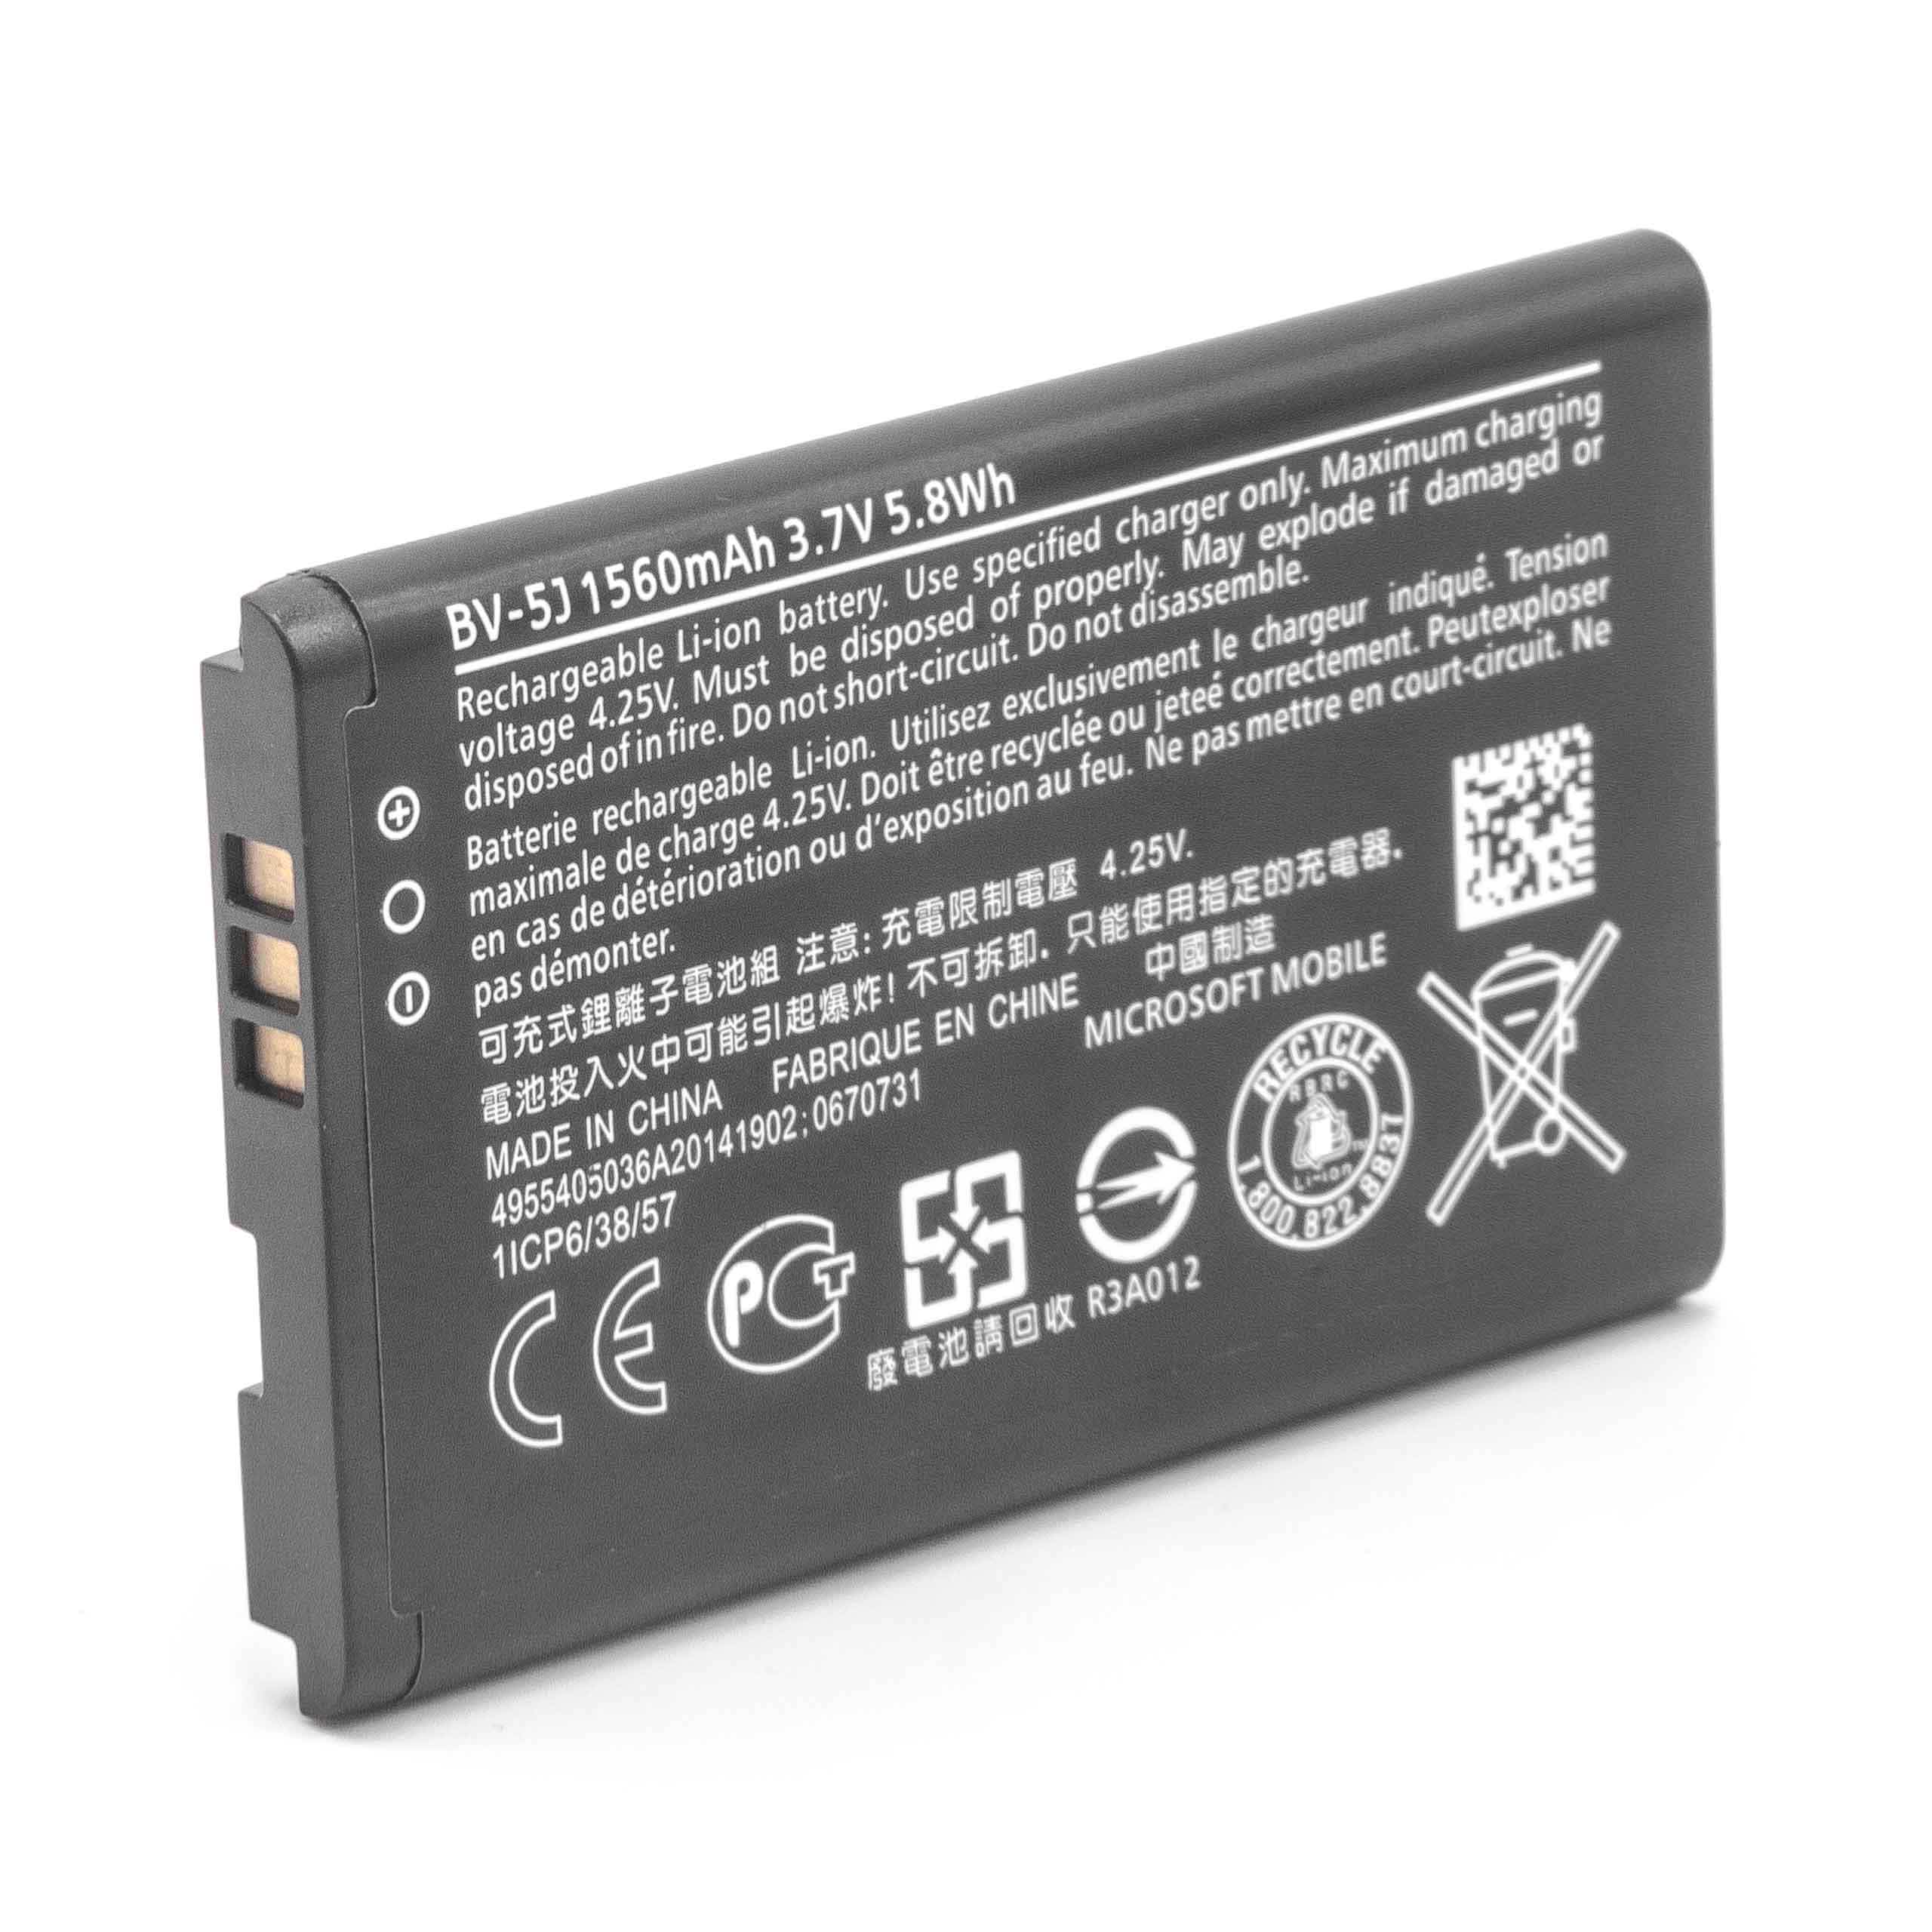 Mobile Phone Battery Replacement for Microsoft / Nokia BV-5J - 1550mAh 3.7V Li-Ion